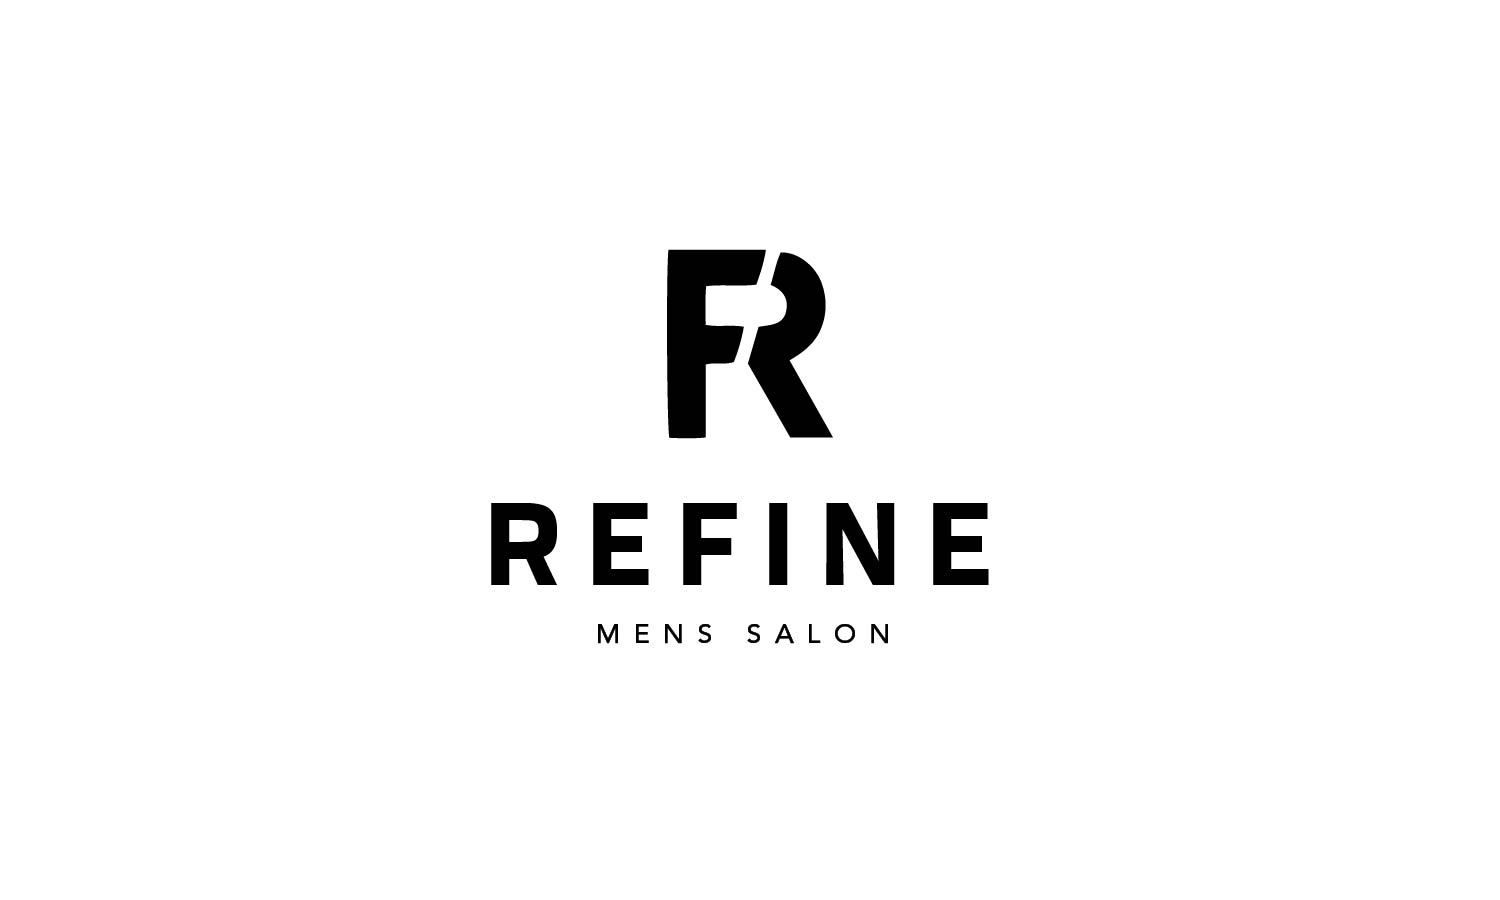 ReFine Mens Salon logo